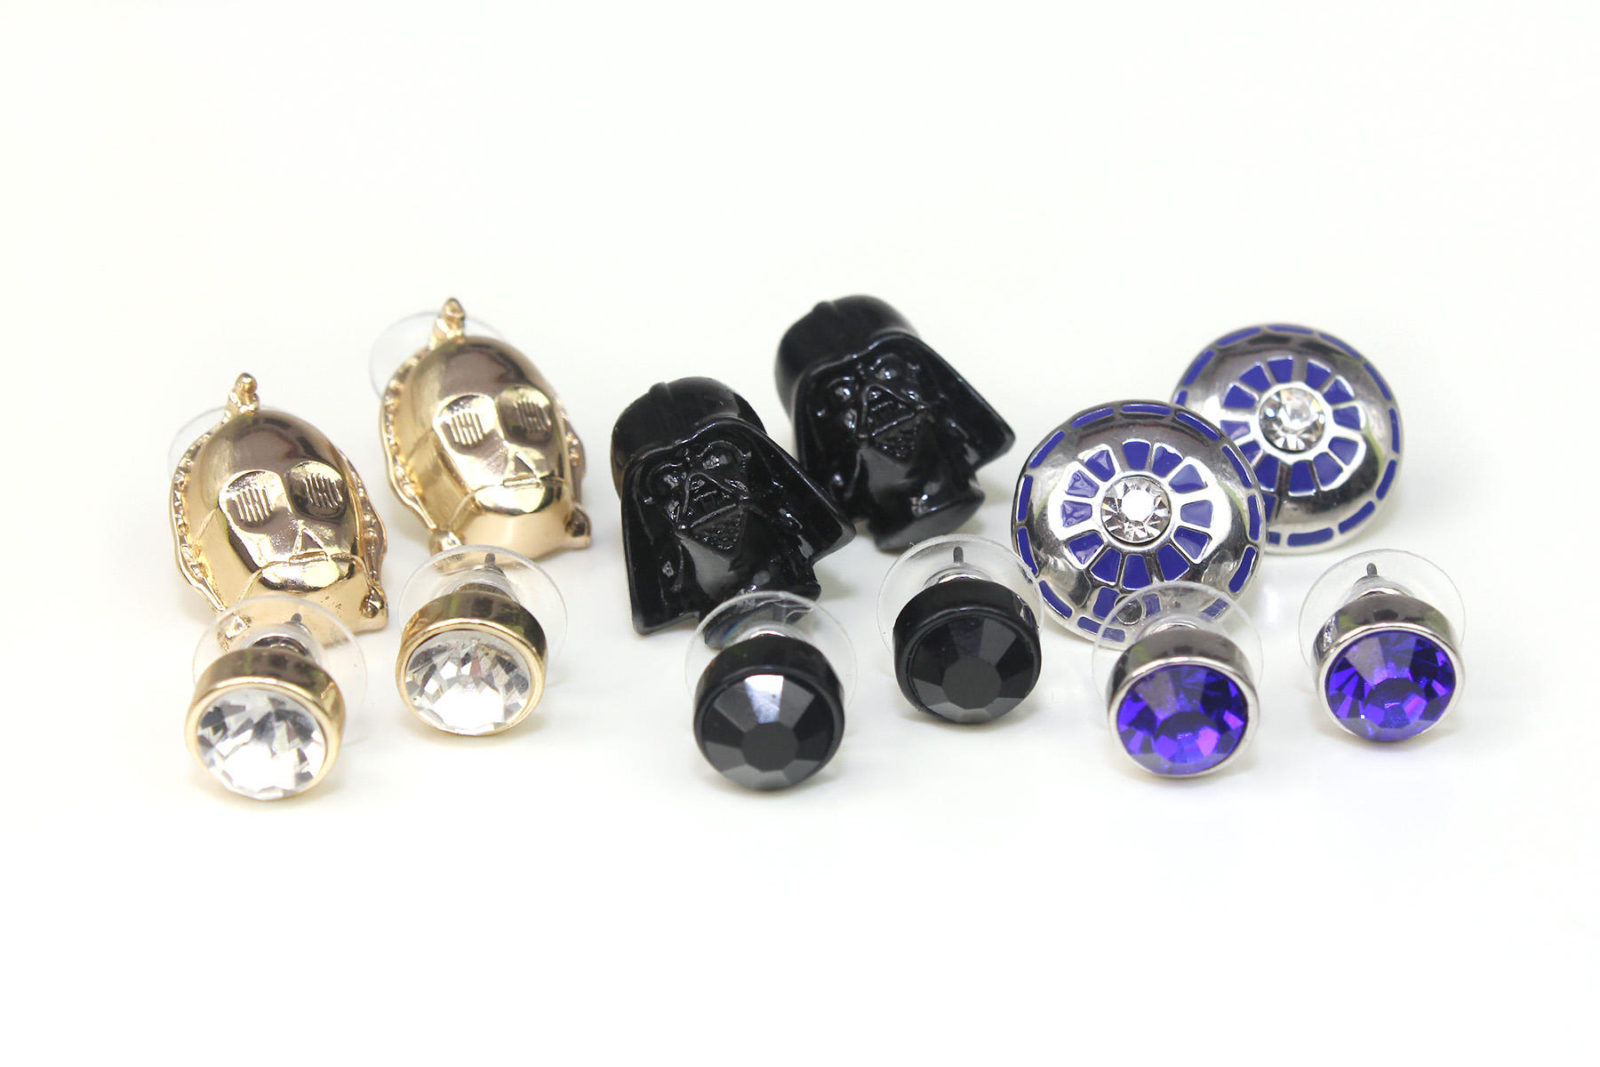 Torrid - Star Wars stud earring set made by SG@NYC